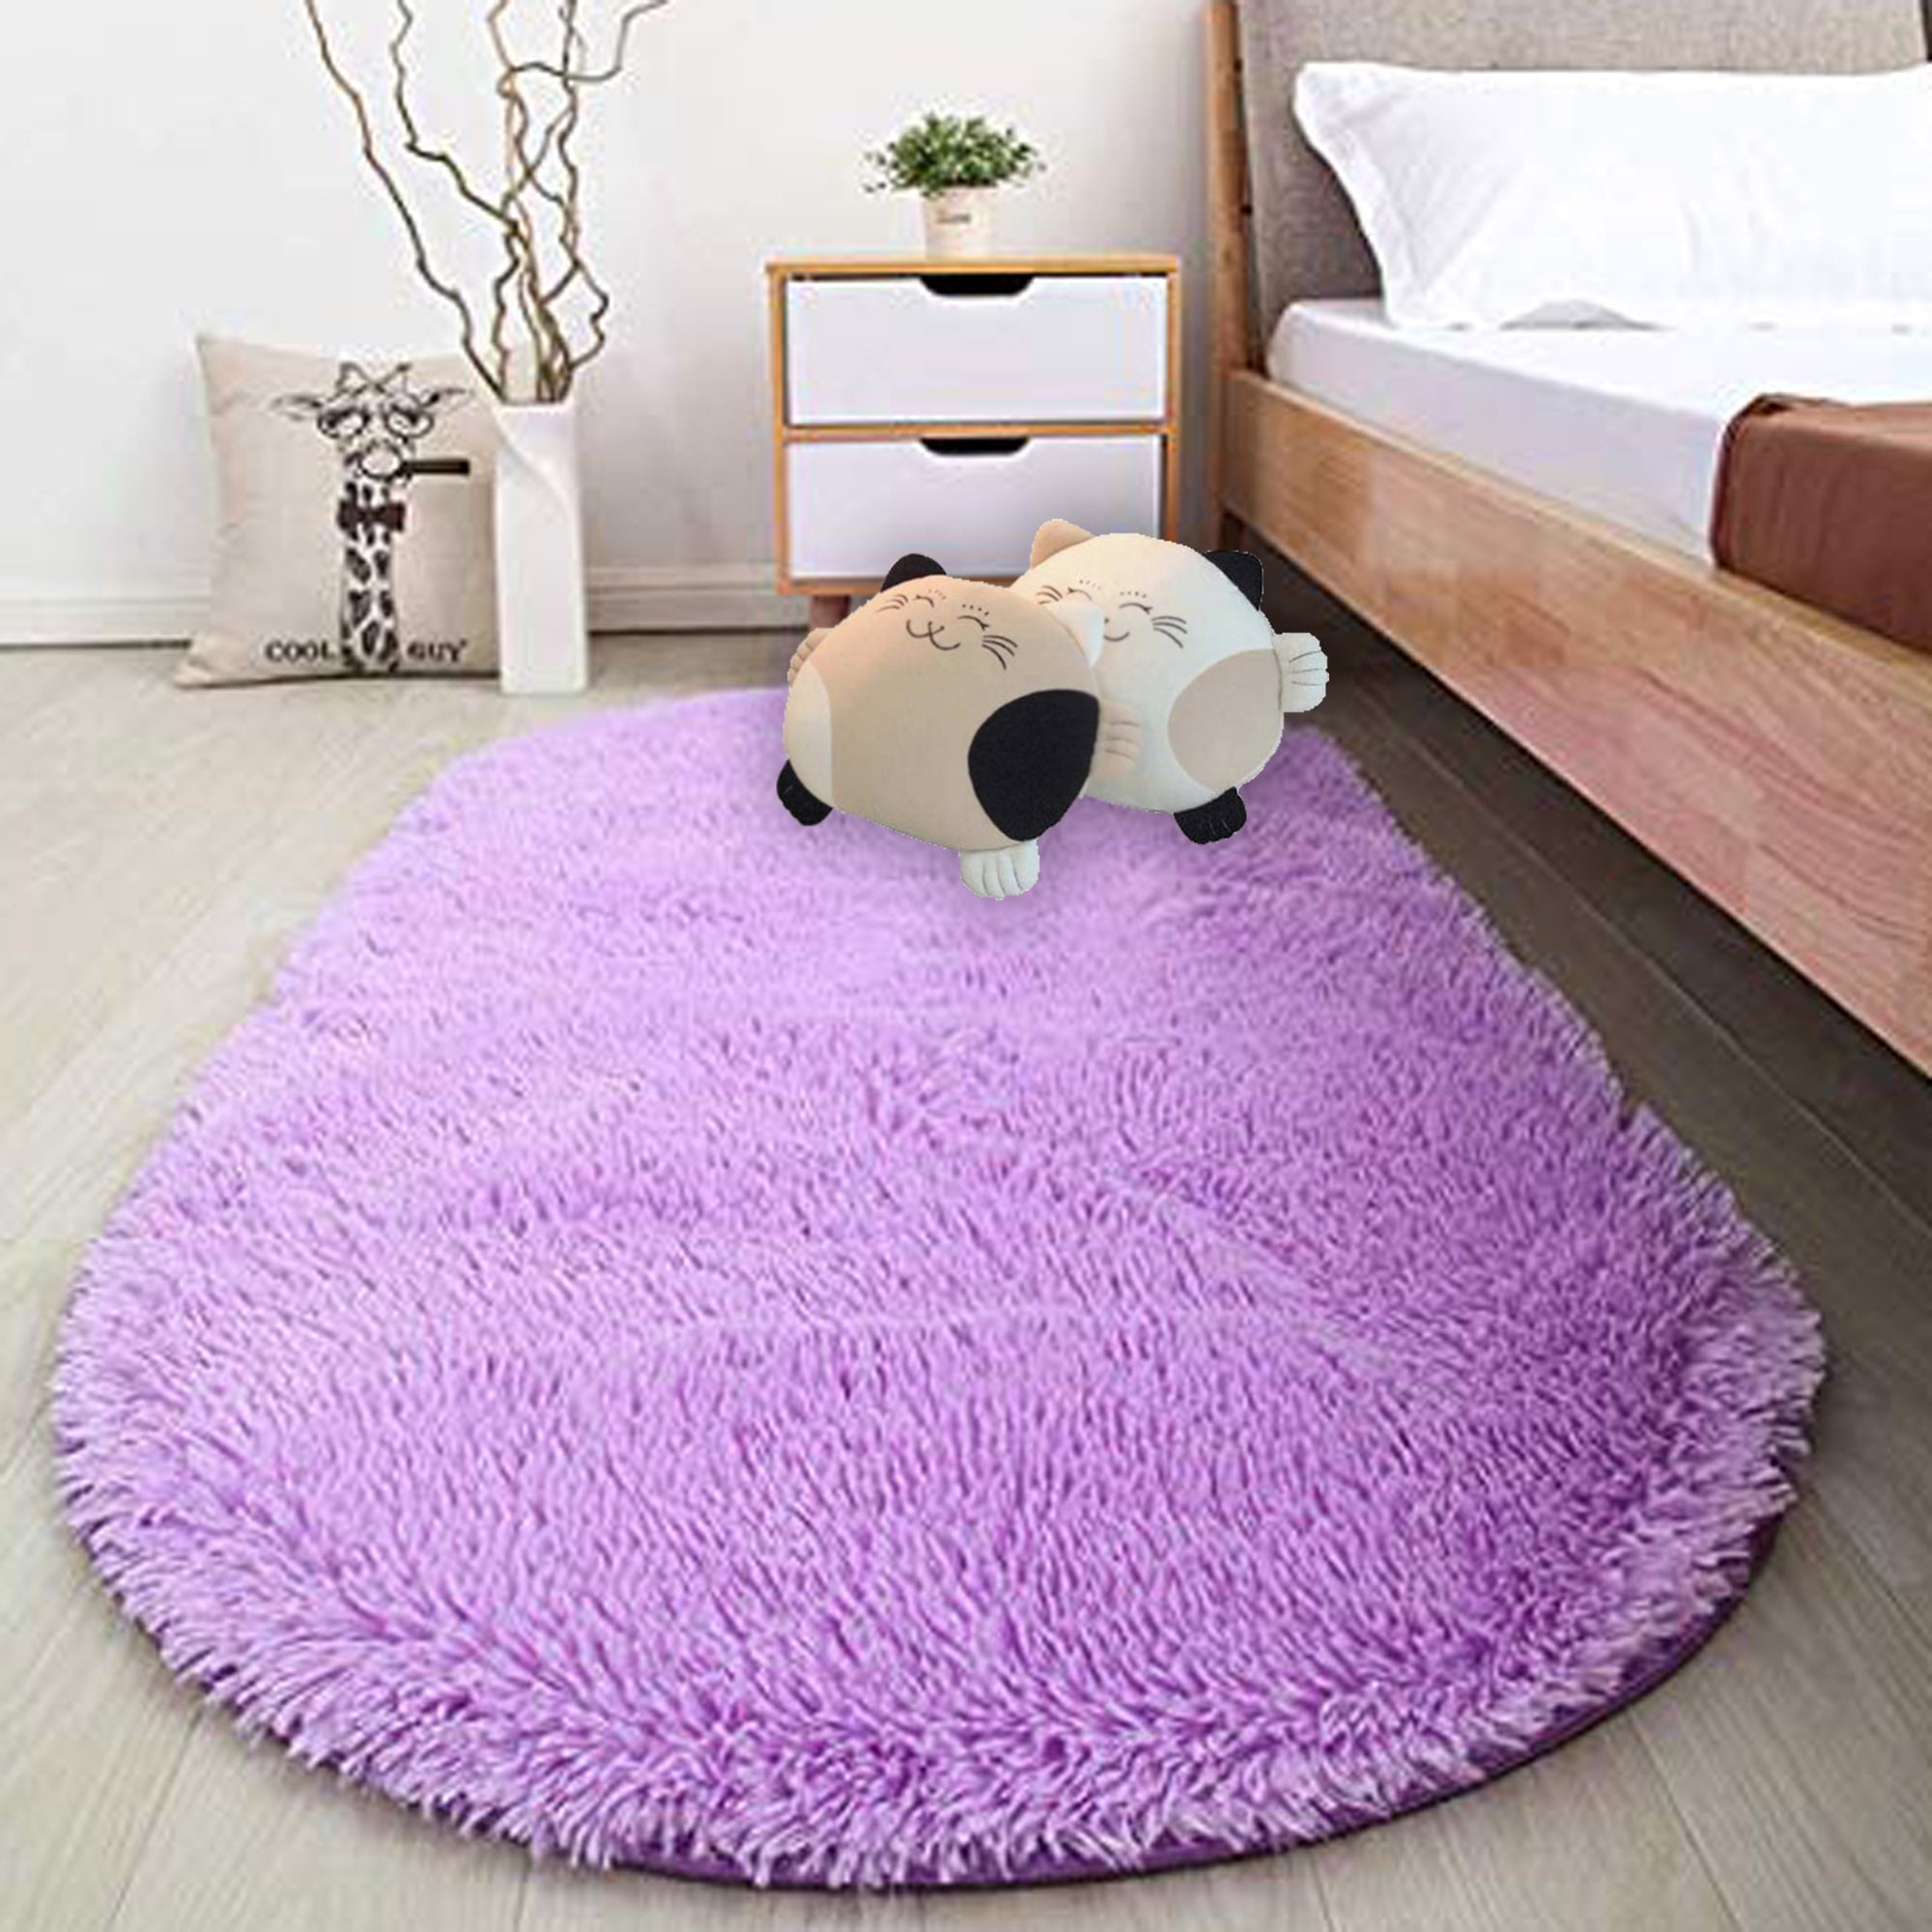 Cooper Girl Purple Galaxy Area Rug Mat Carpet 5'3x4' for Living Room Bedroom Dining Room 